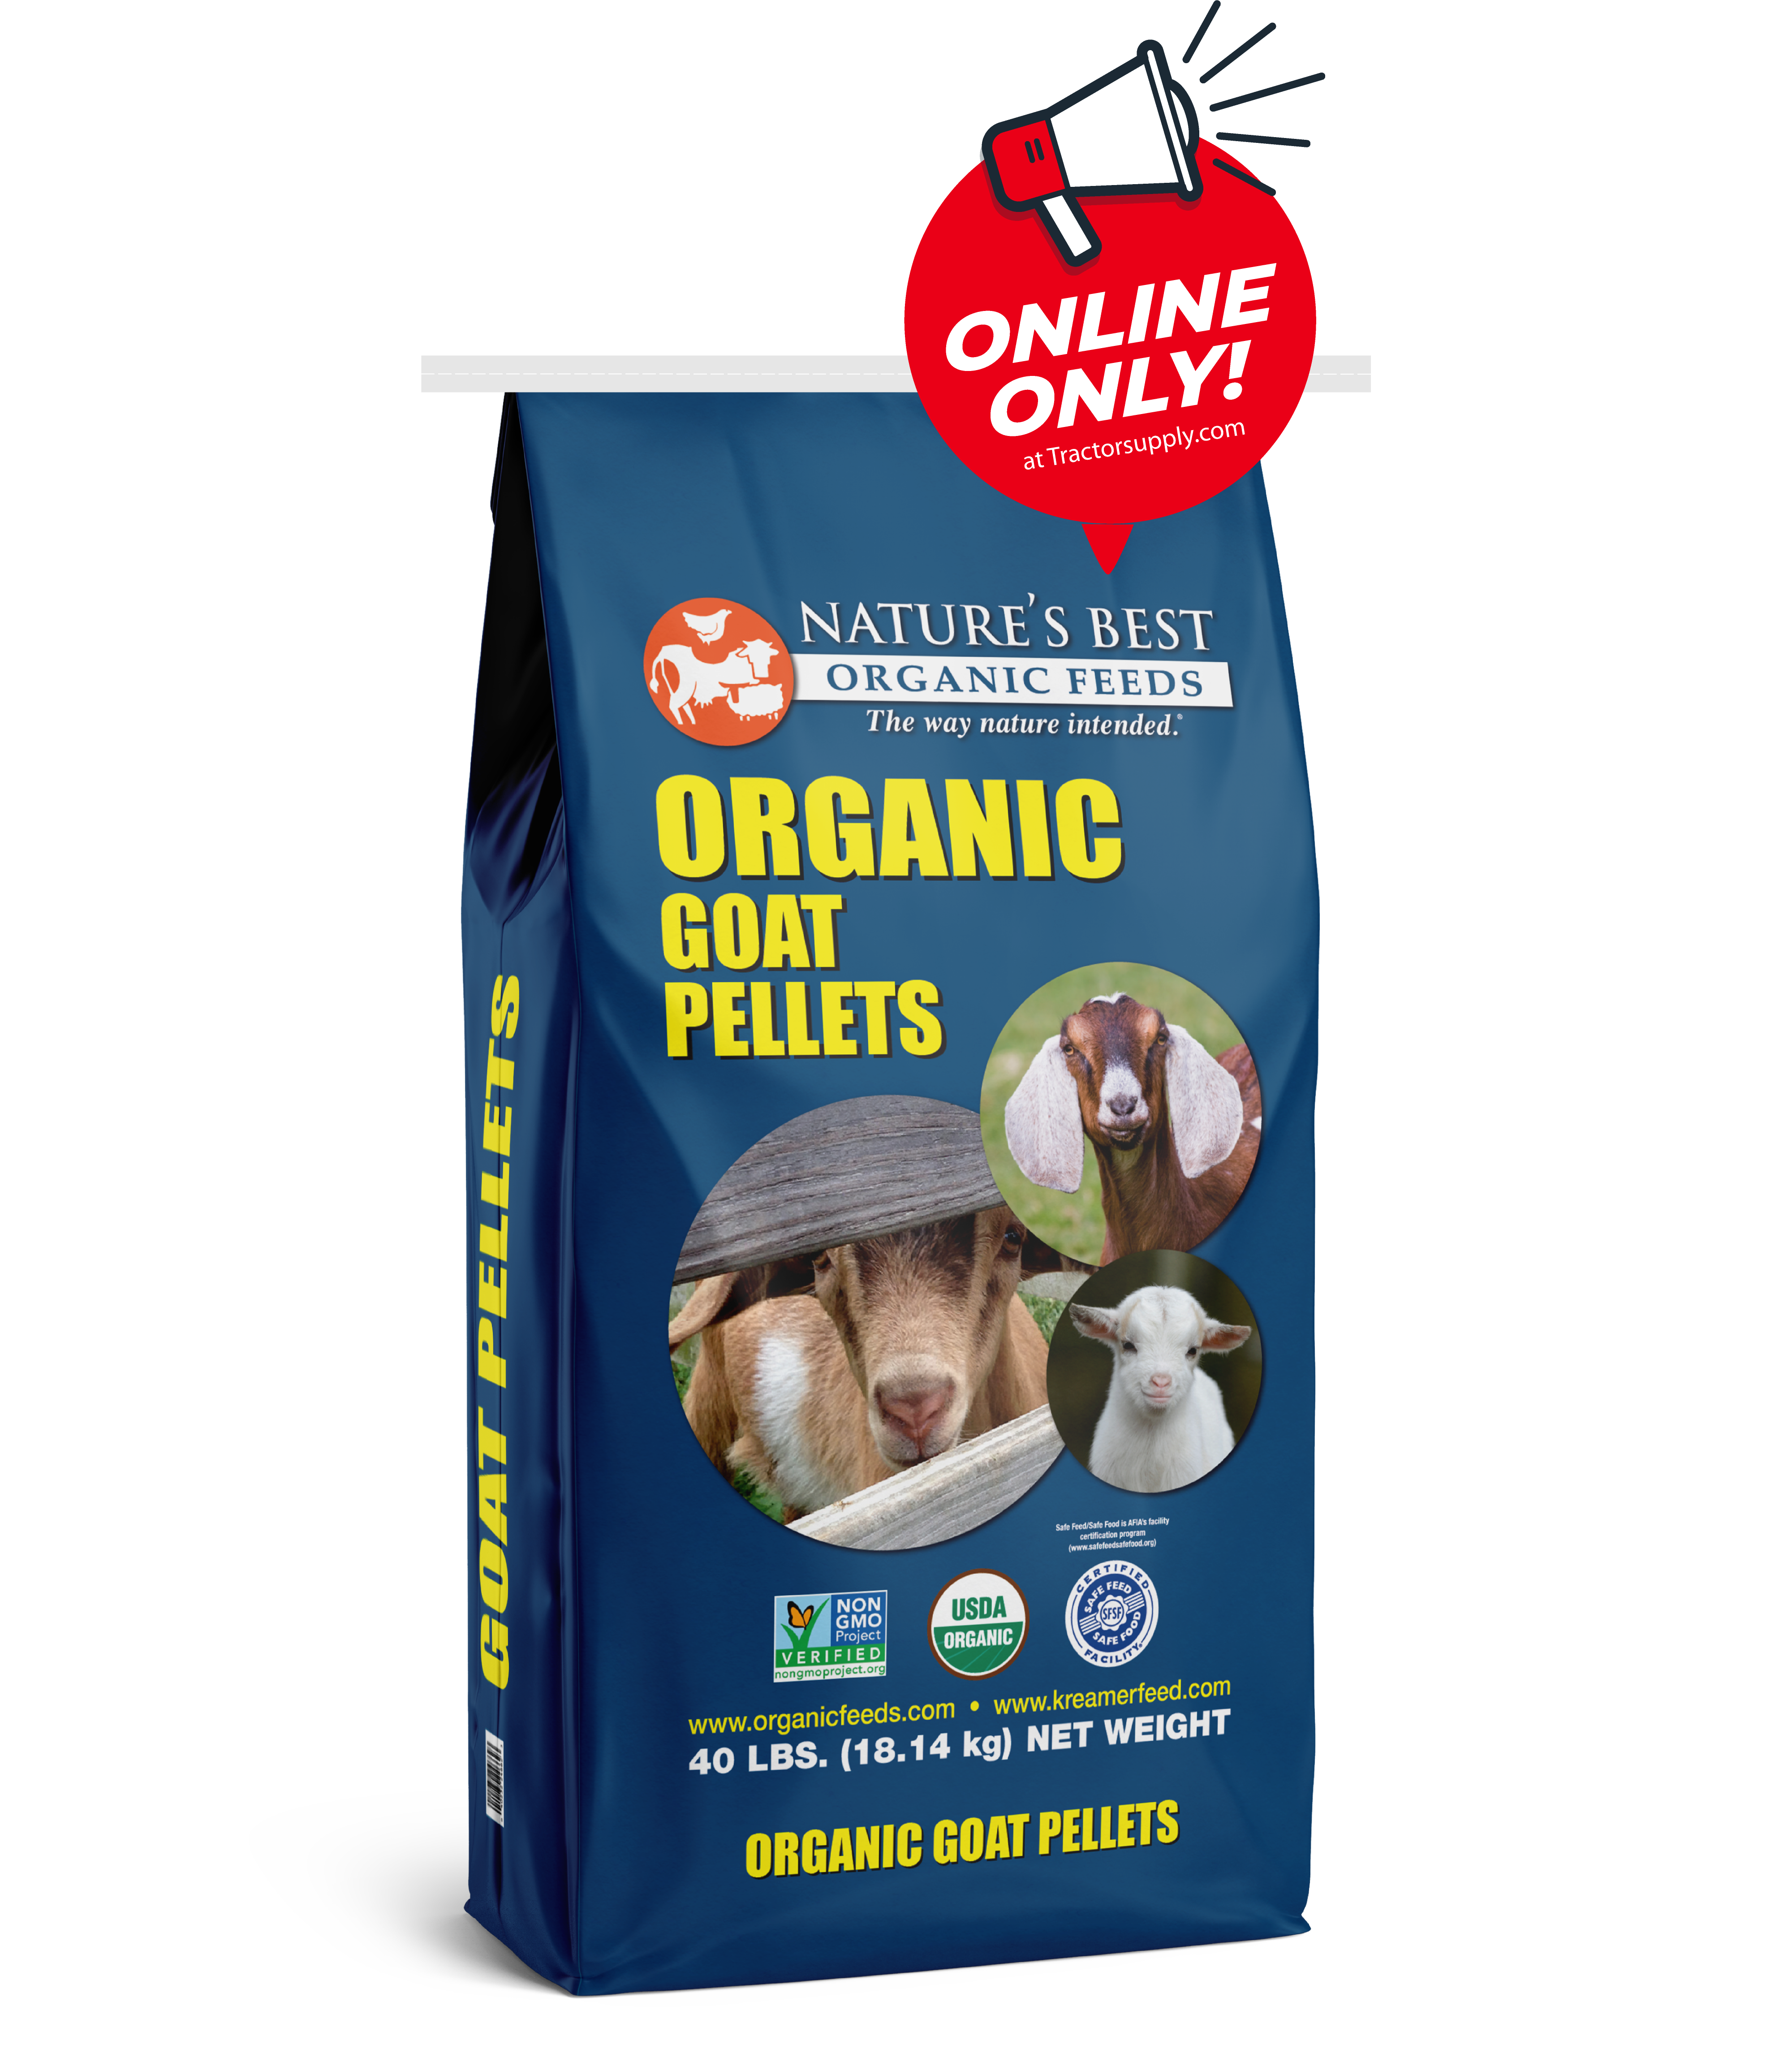 Organic goat pellets online only